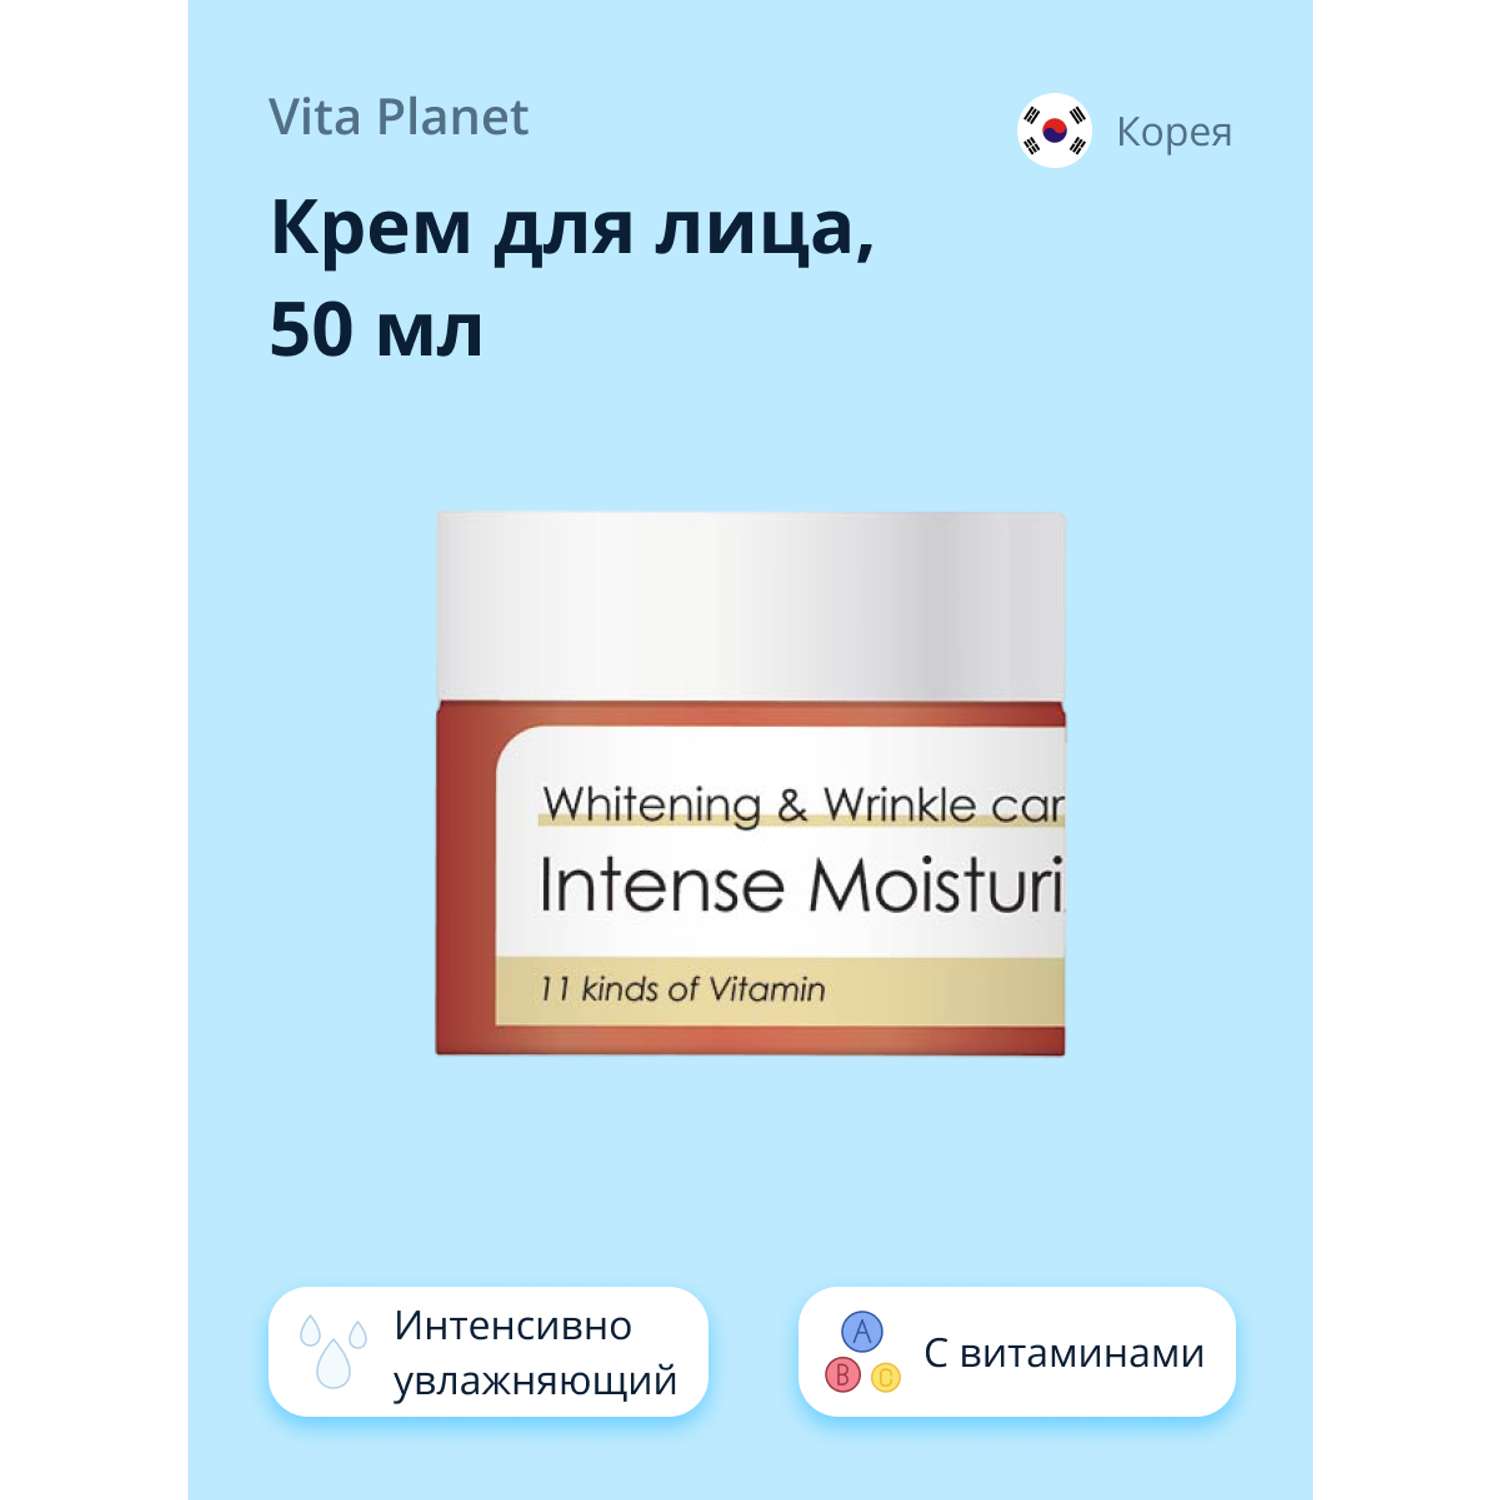 Крем для лица Vita Planet V11 с витаминами (интенсивно увлажняющий) 50 мл - фото 1